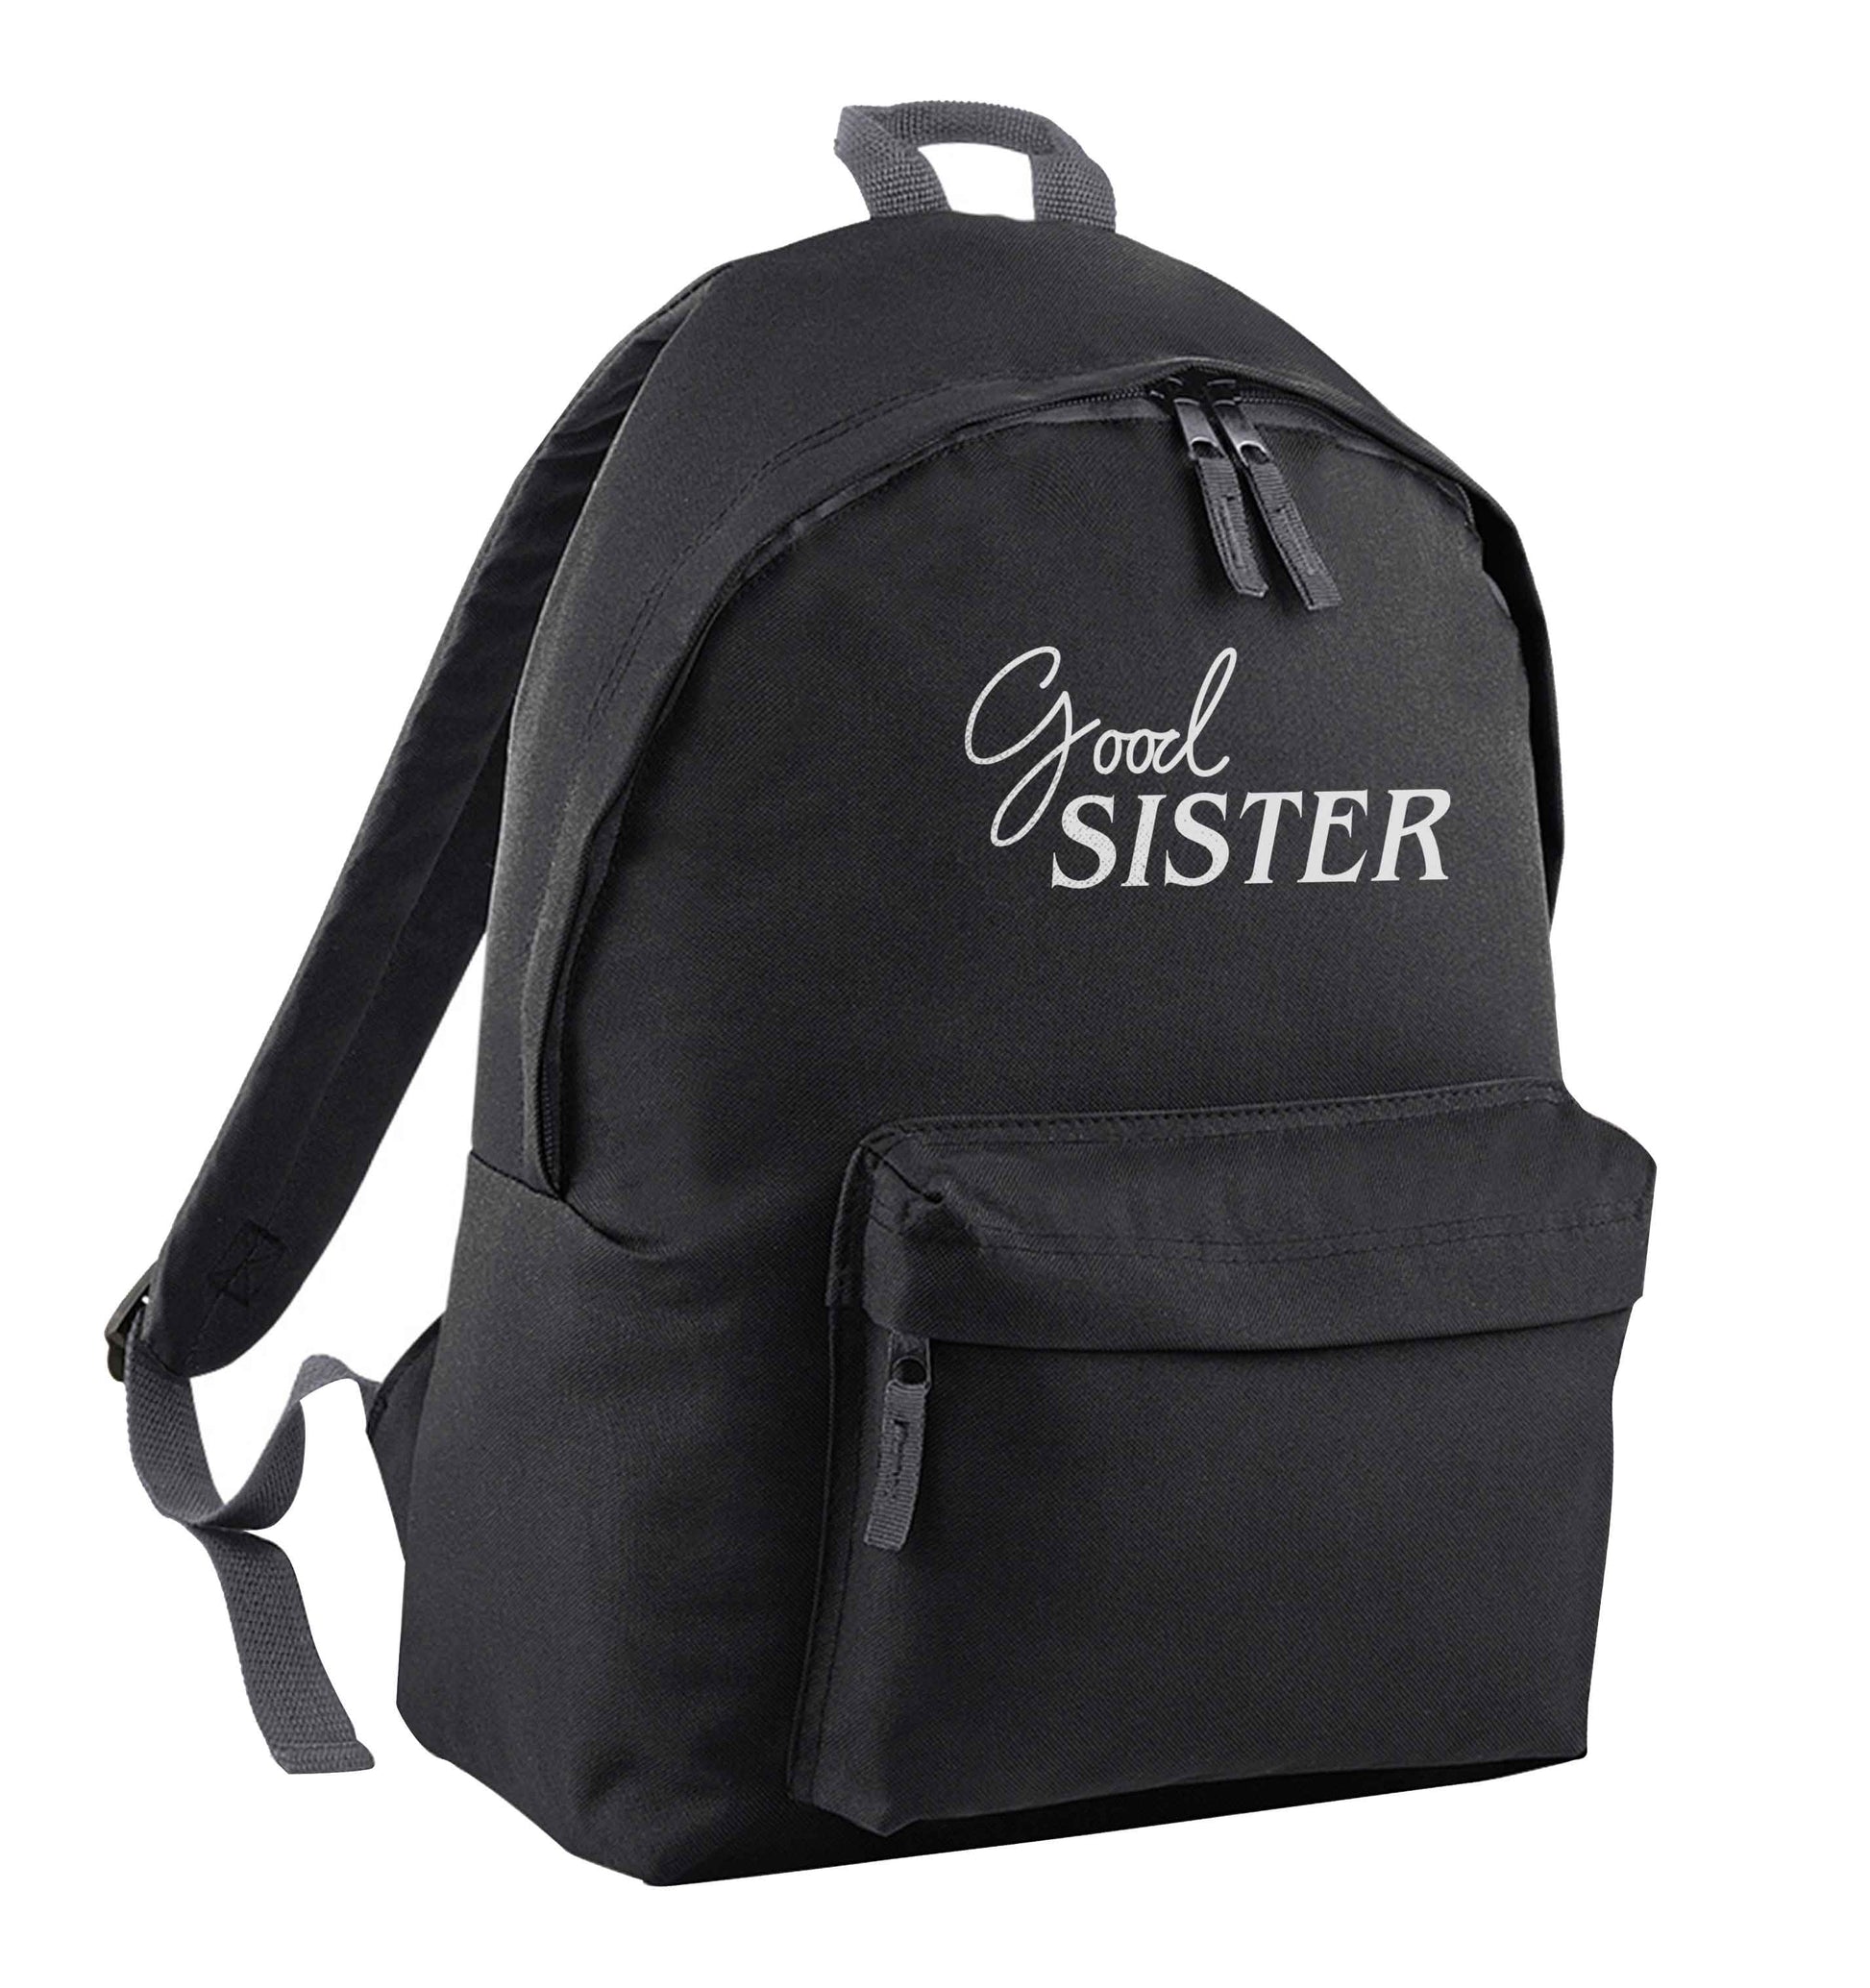 Good sister black adults backpack